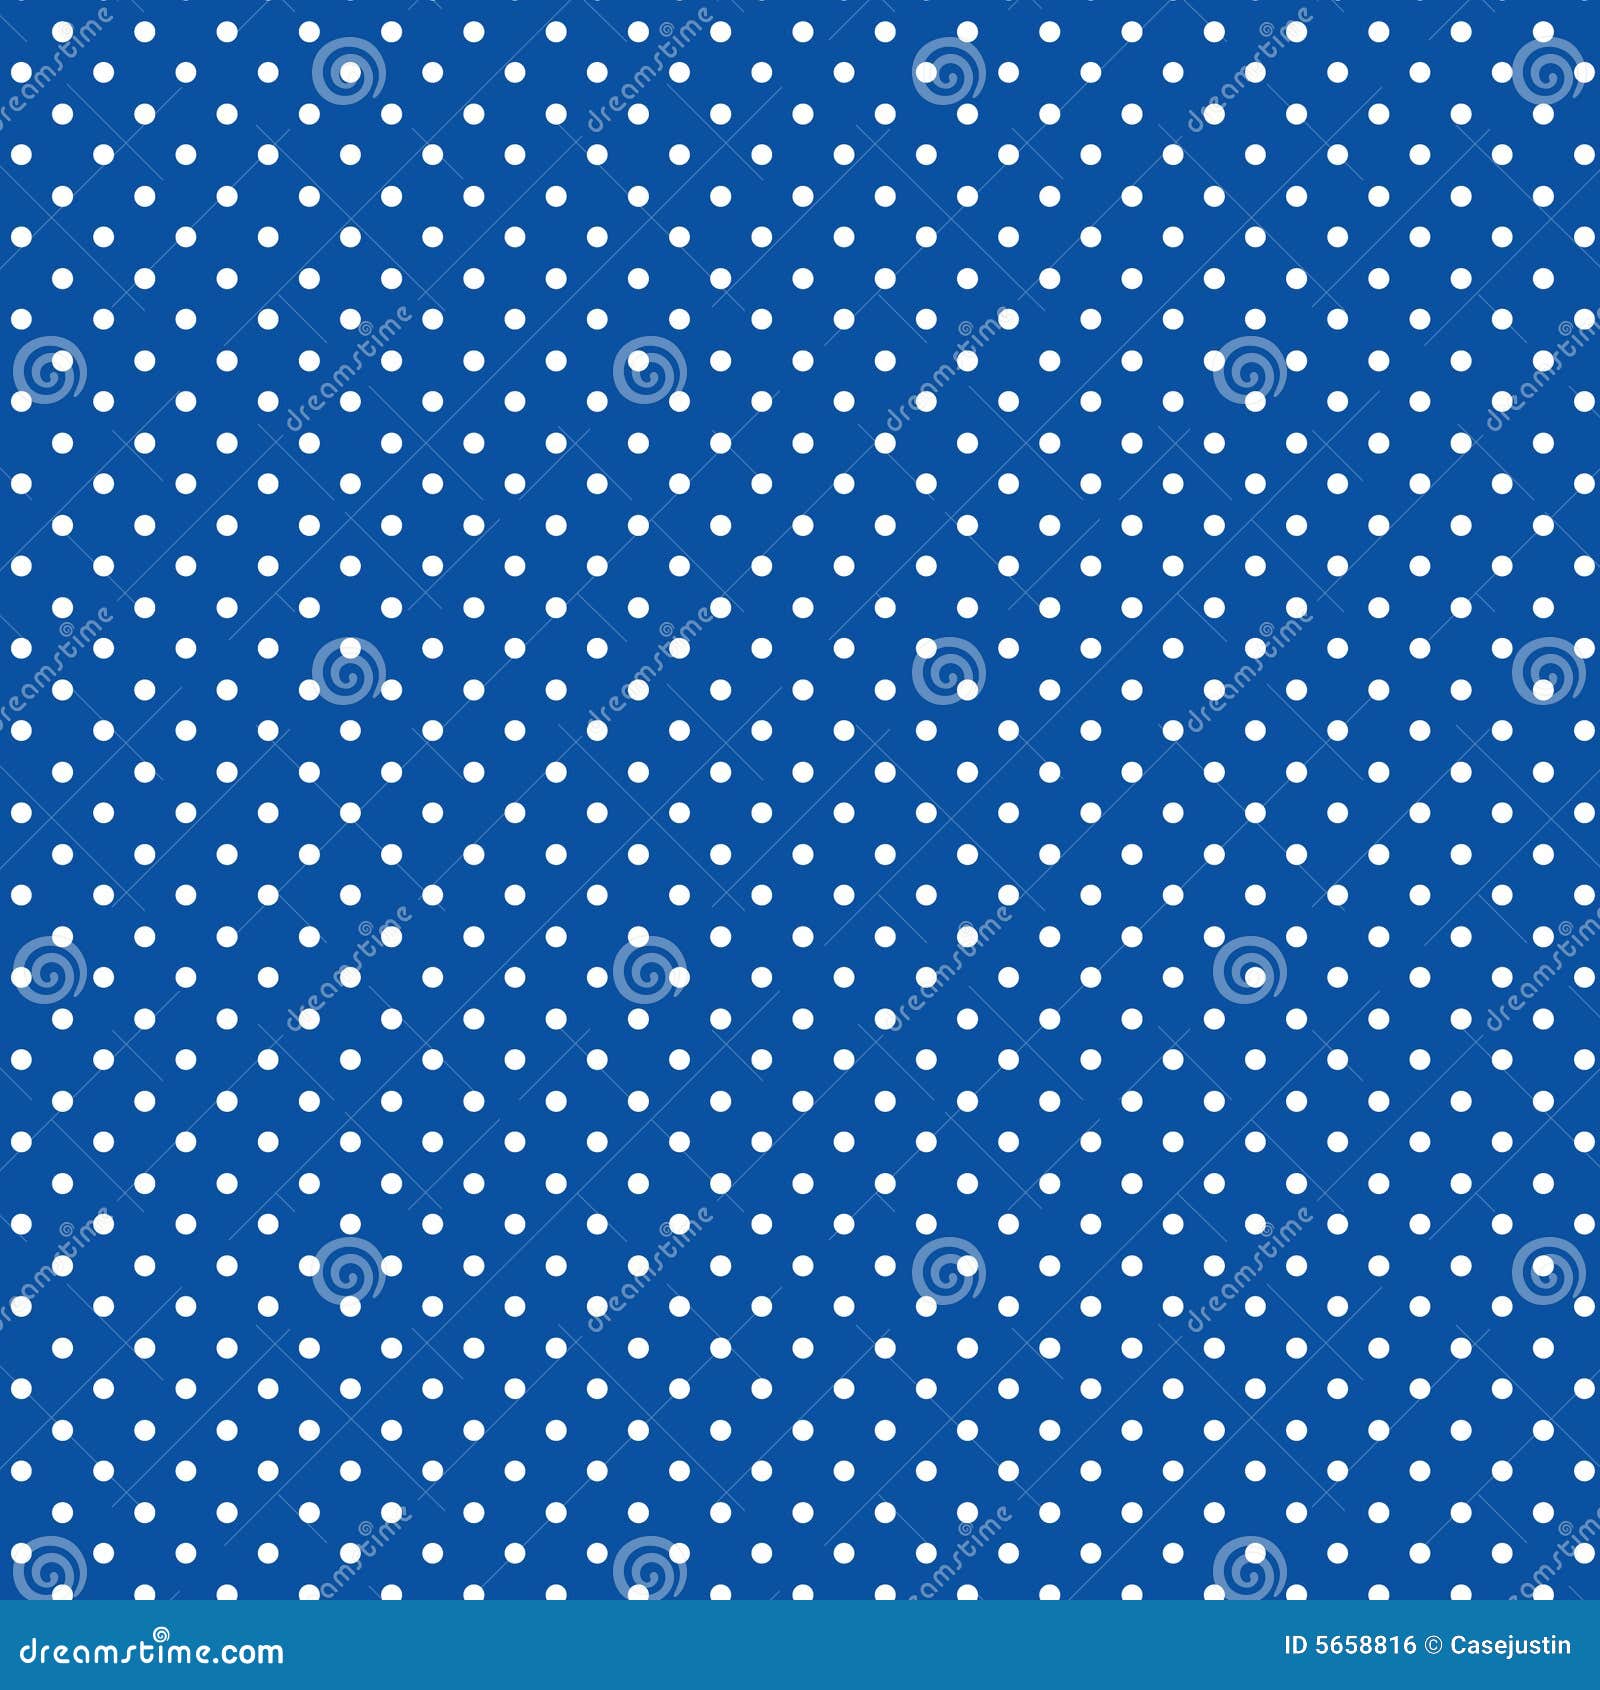 white polka dots, blue background, seamless background